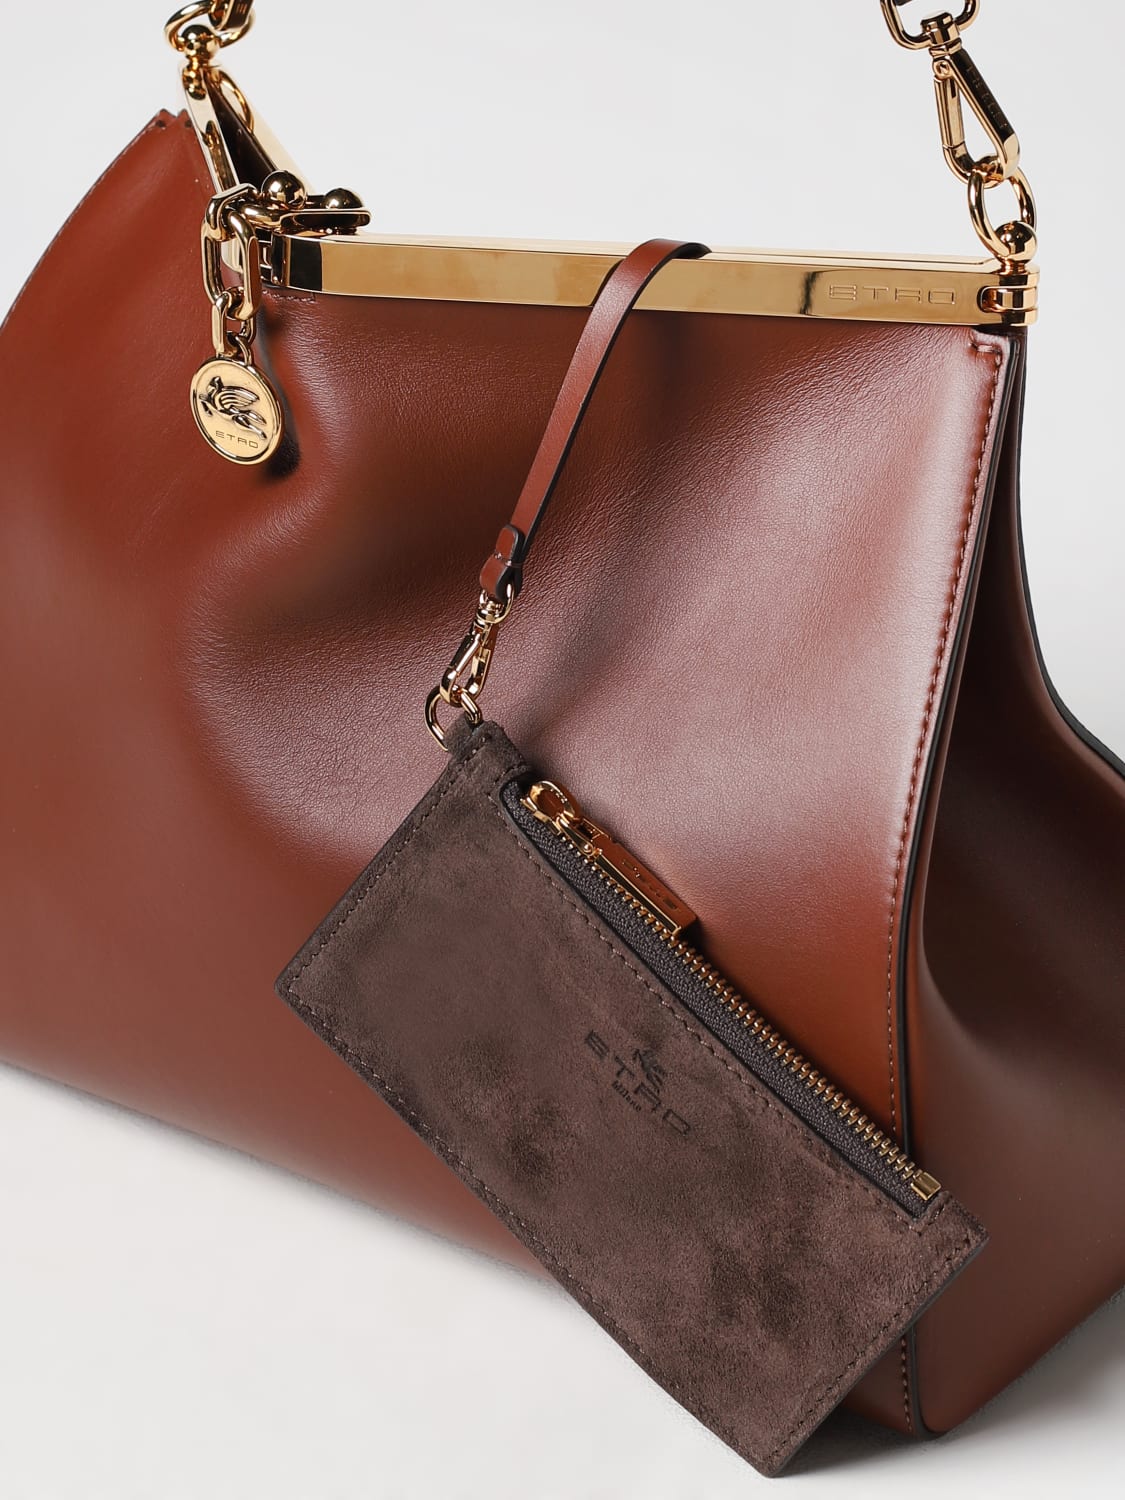 Etro Vela Bag In Leather in Natural